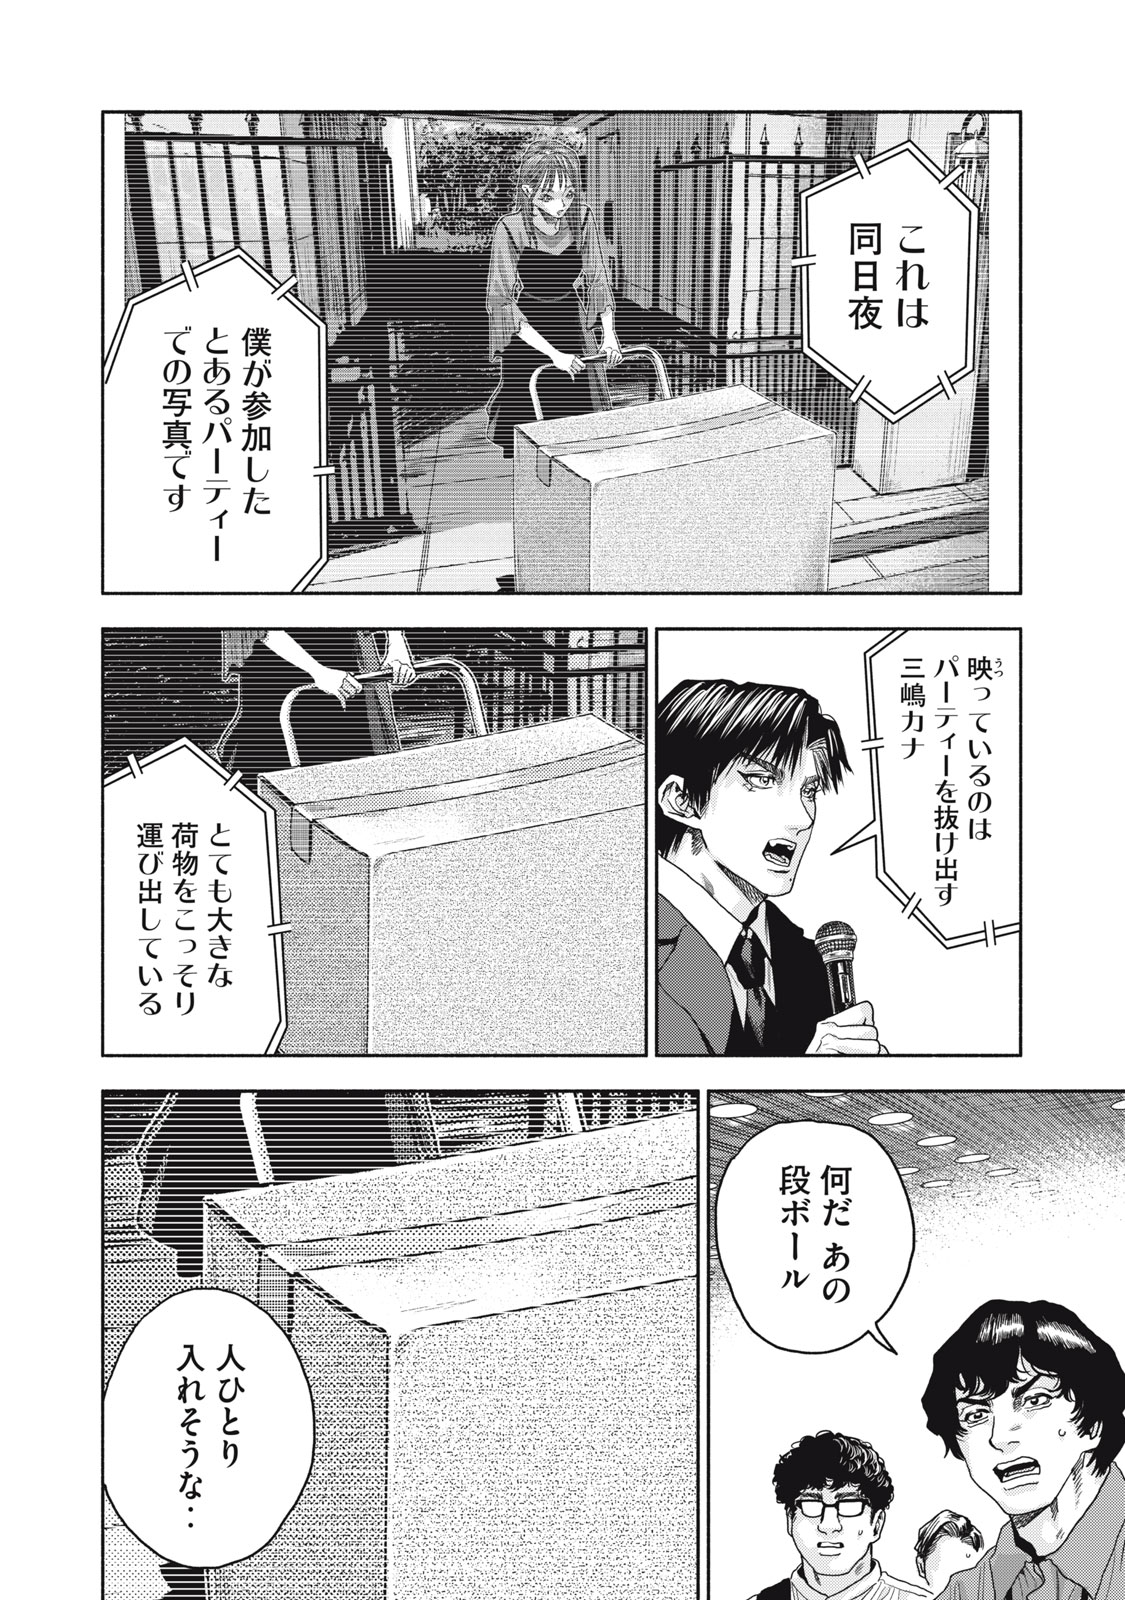 Rikon Shinai Otoko CASE 2 - Chapter 6.2 - Page 8